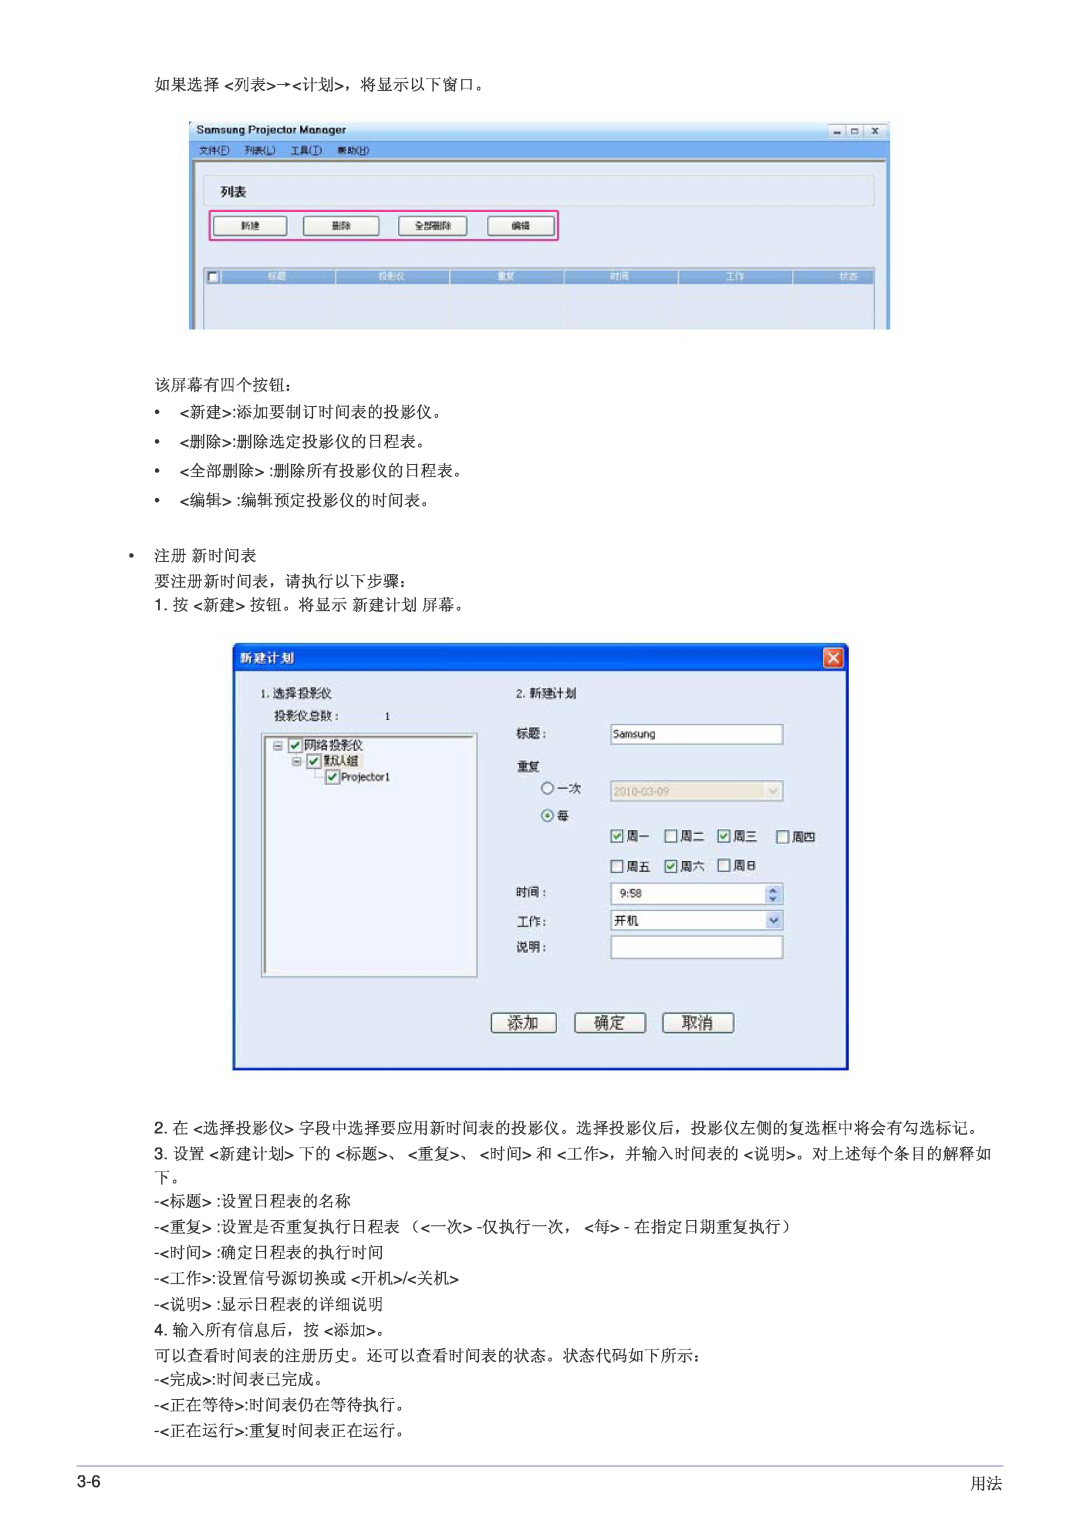 Samsung SP1055XWX/EN, SP1005XWX/EN manual 如果选择 列表→计划，将显示以下窗口。 该屏幕有四个按钮： 新建添加要制订时间表的投影仪。 删除删除选定投影仪的日程表。 